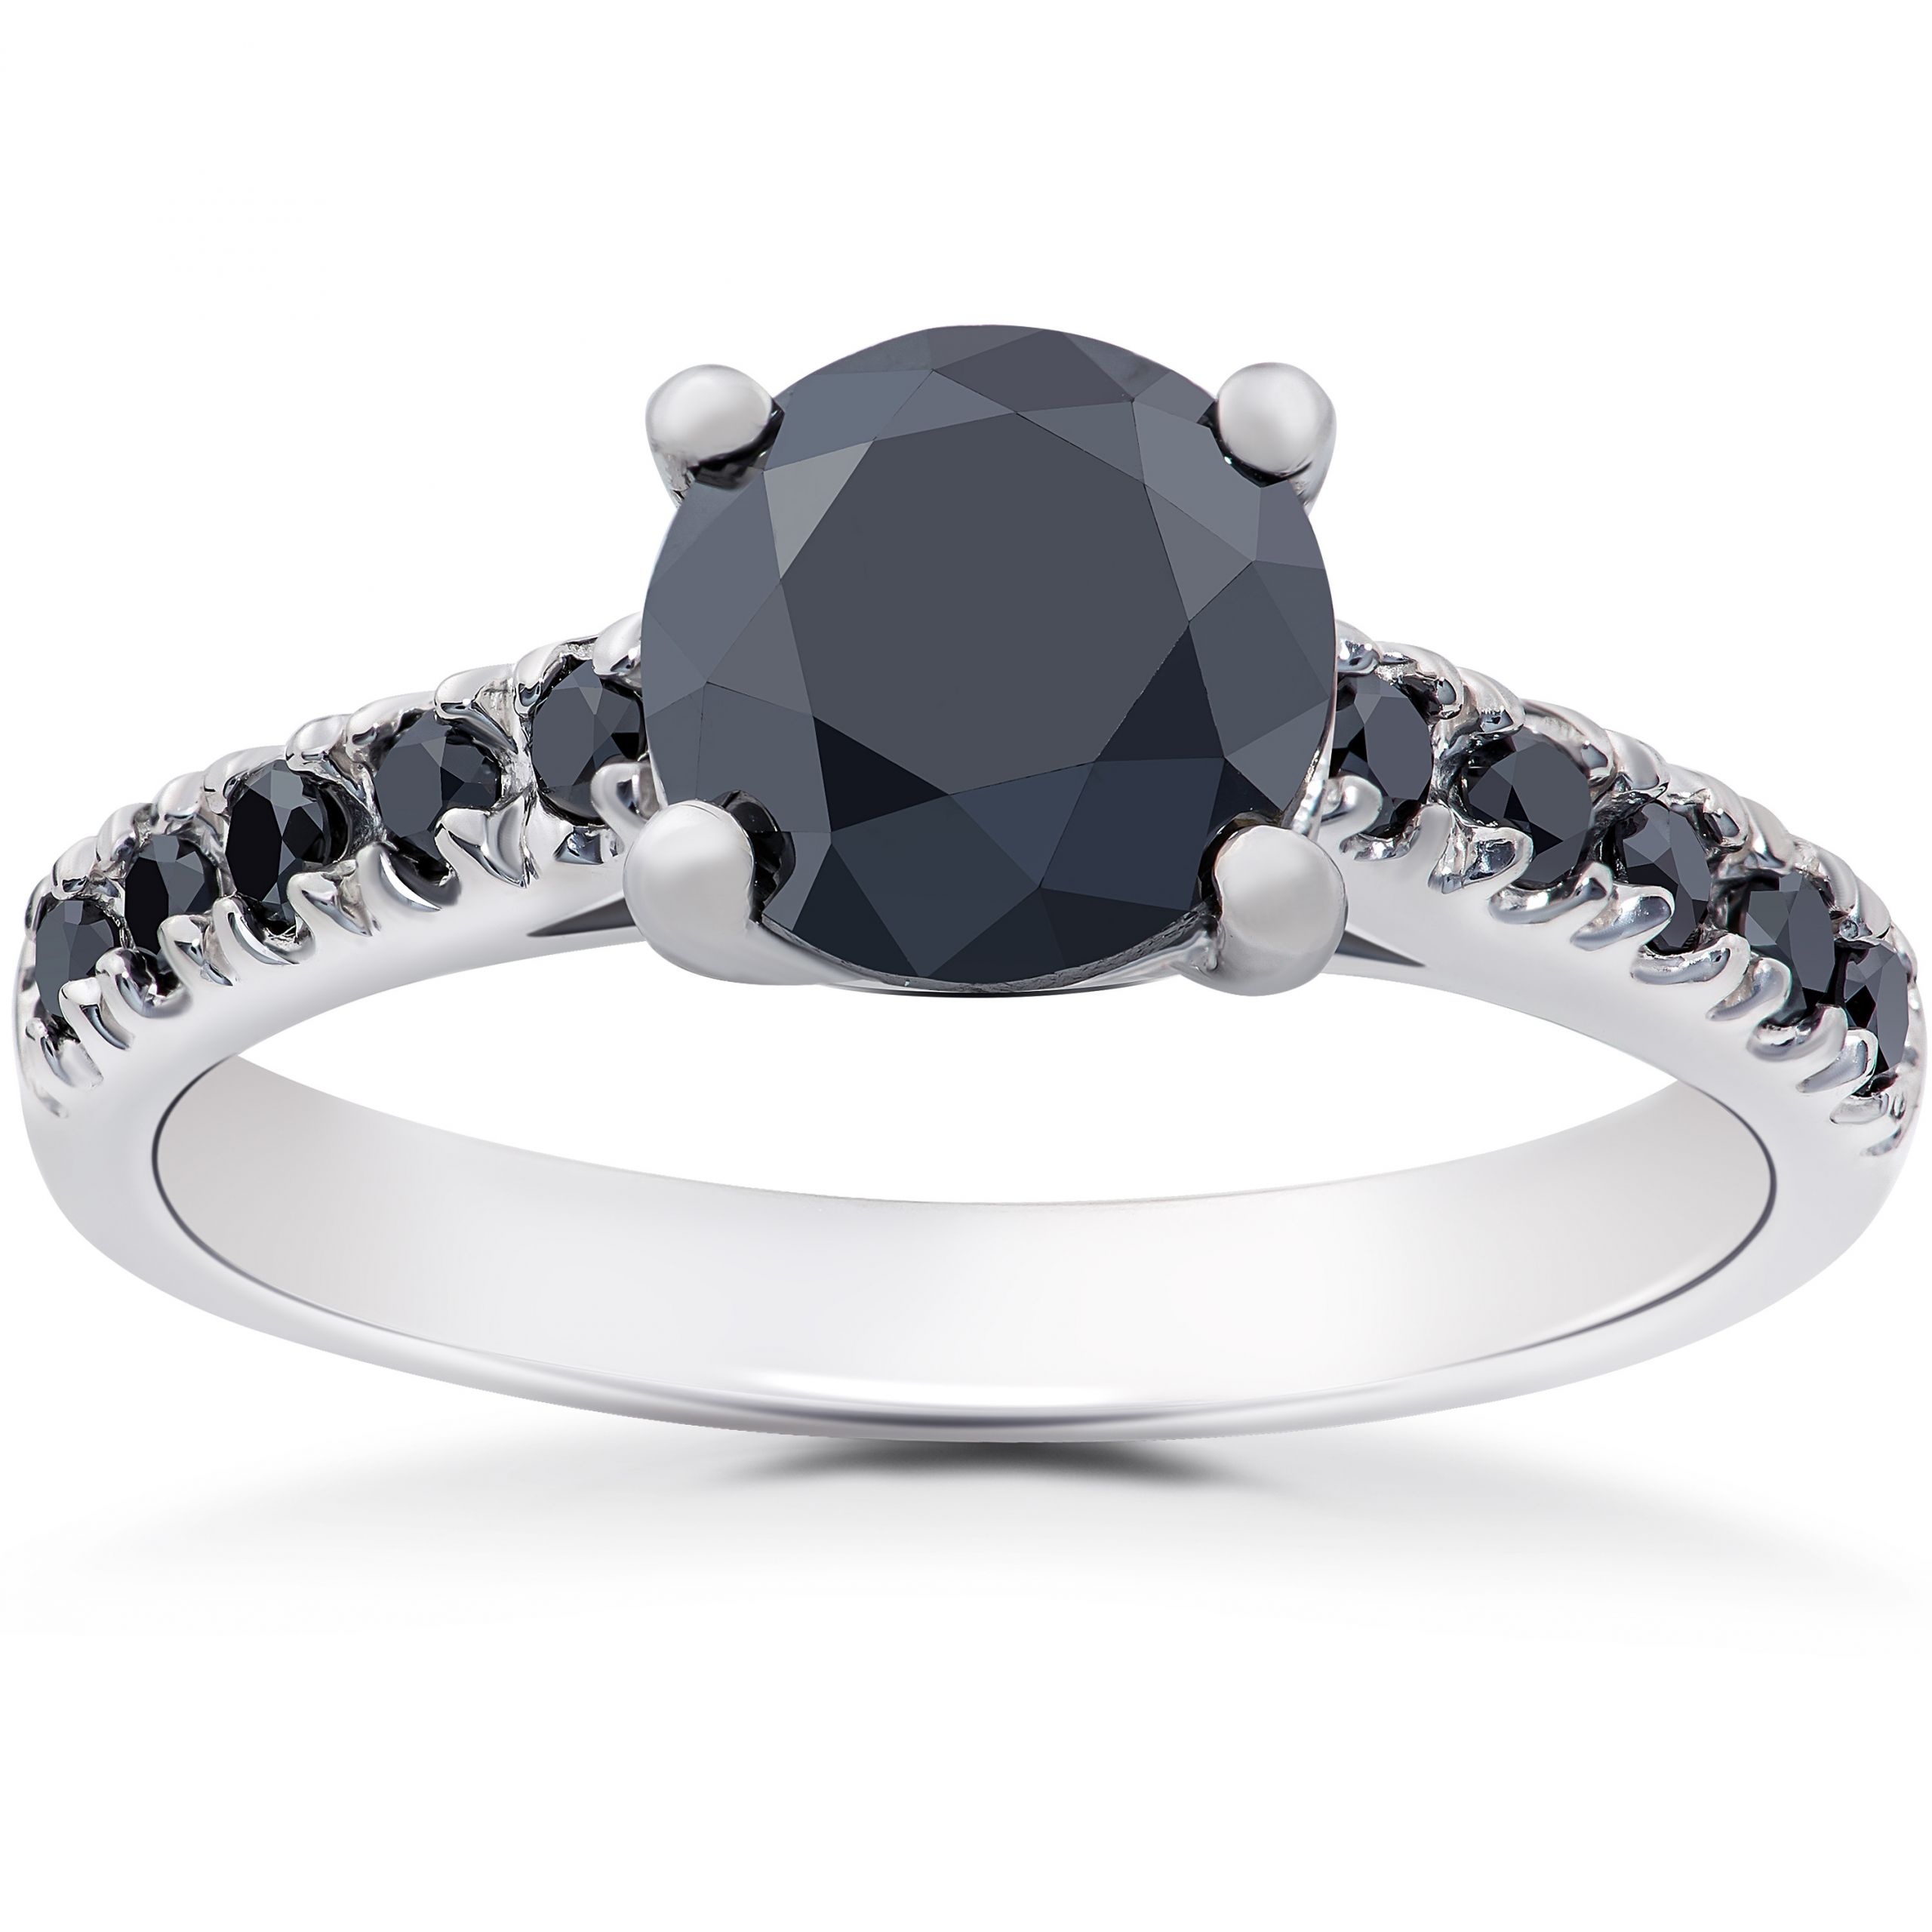 Black Diamond Solitaire Engagement Ring
 2 1 4 ct Black Diamond Solitaire Accent Engagement Ring